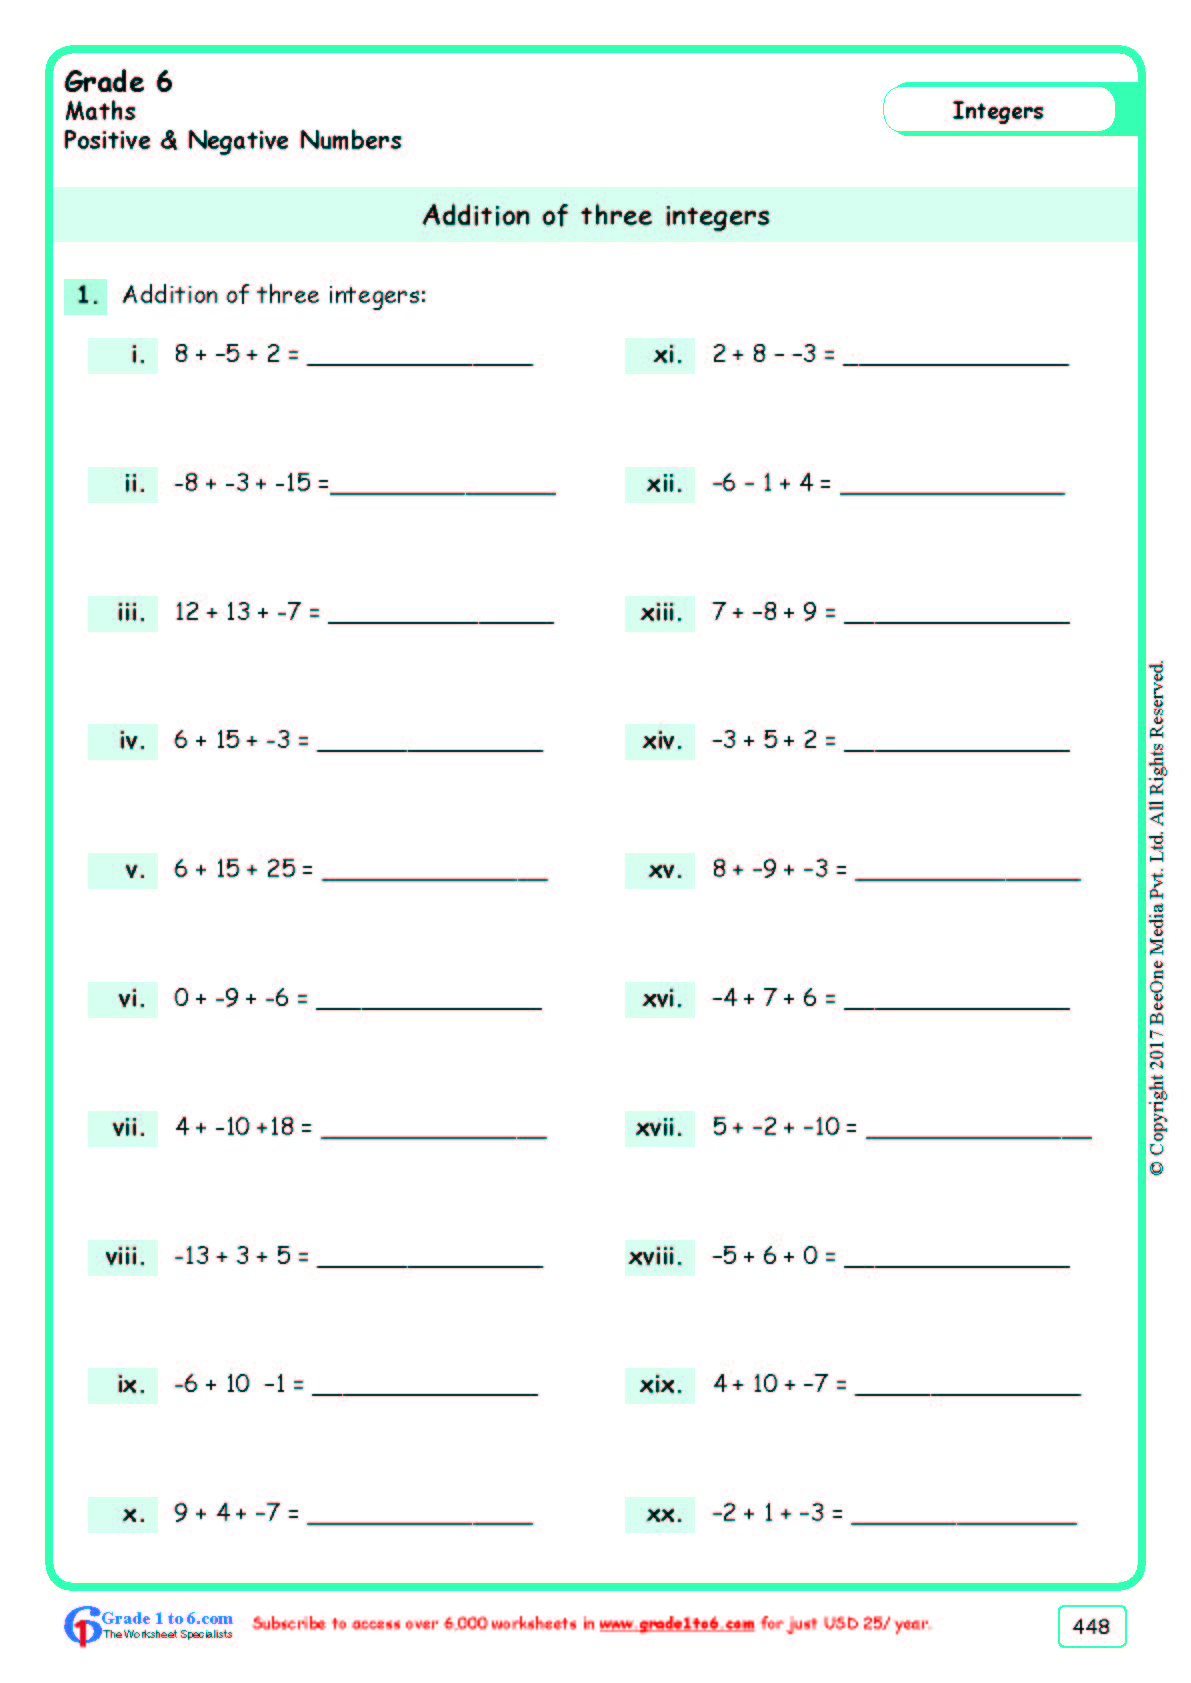 7th-grade-math-integers-worksheet